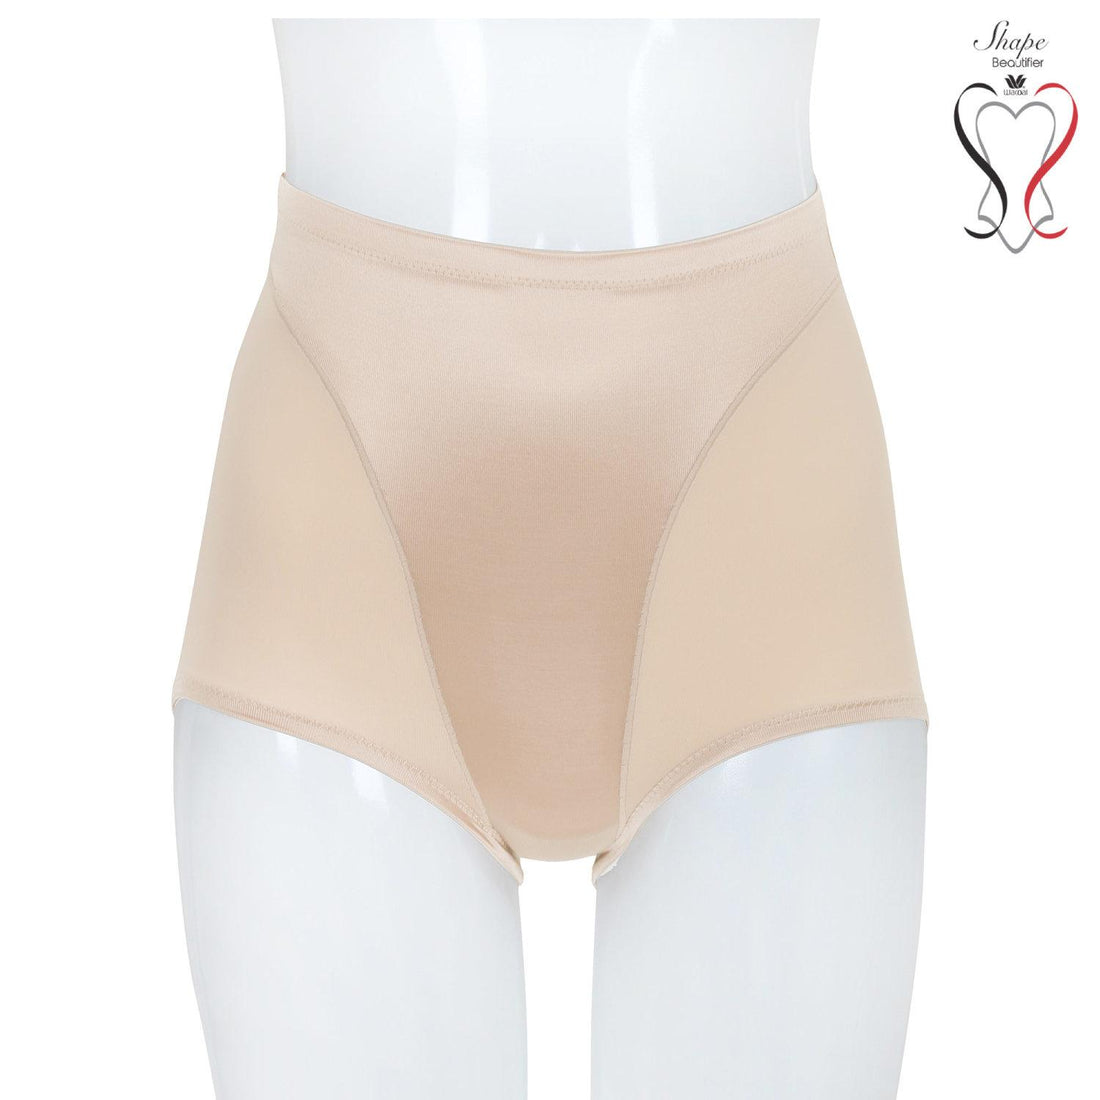 Wacoal Shapewear Hips กางเกงกระชับหน้าท้อง รุ่น WY1128 สีเบจ (BE)